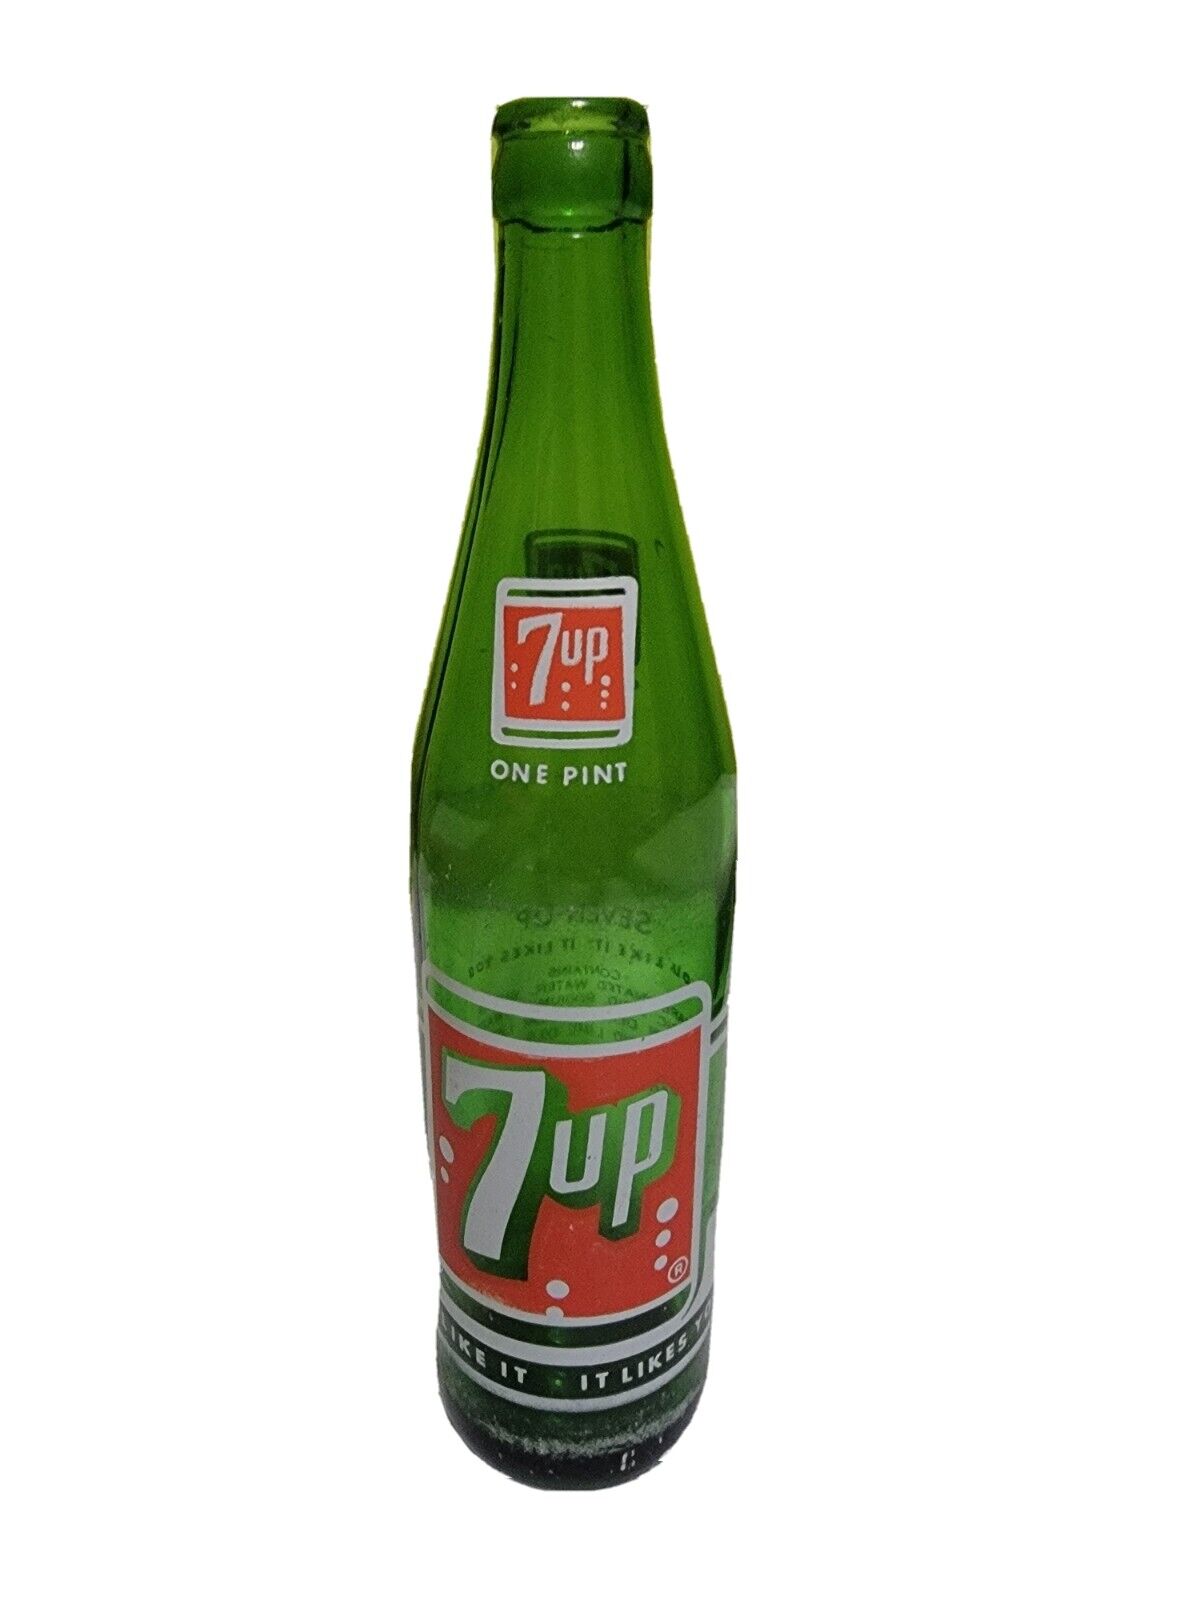 Rare Vintage Antique Soda Pop Glass Bottle Seven Up 7UP Green One Pint